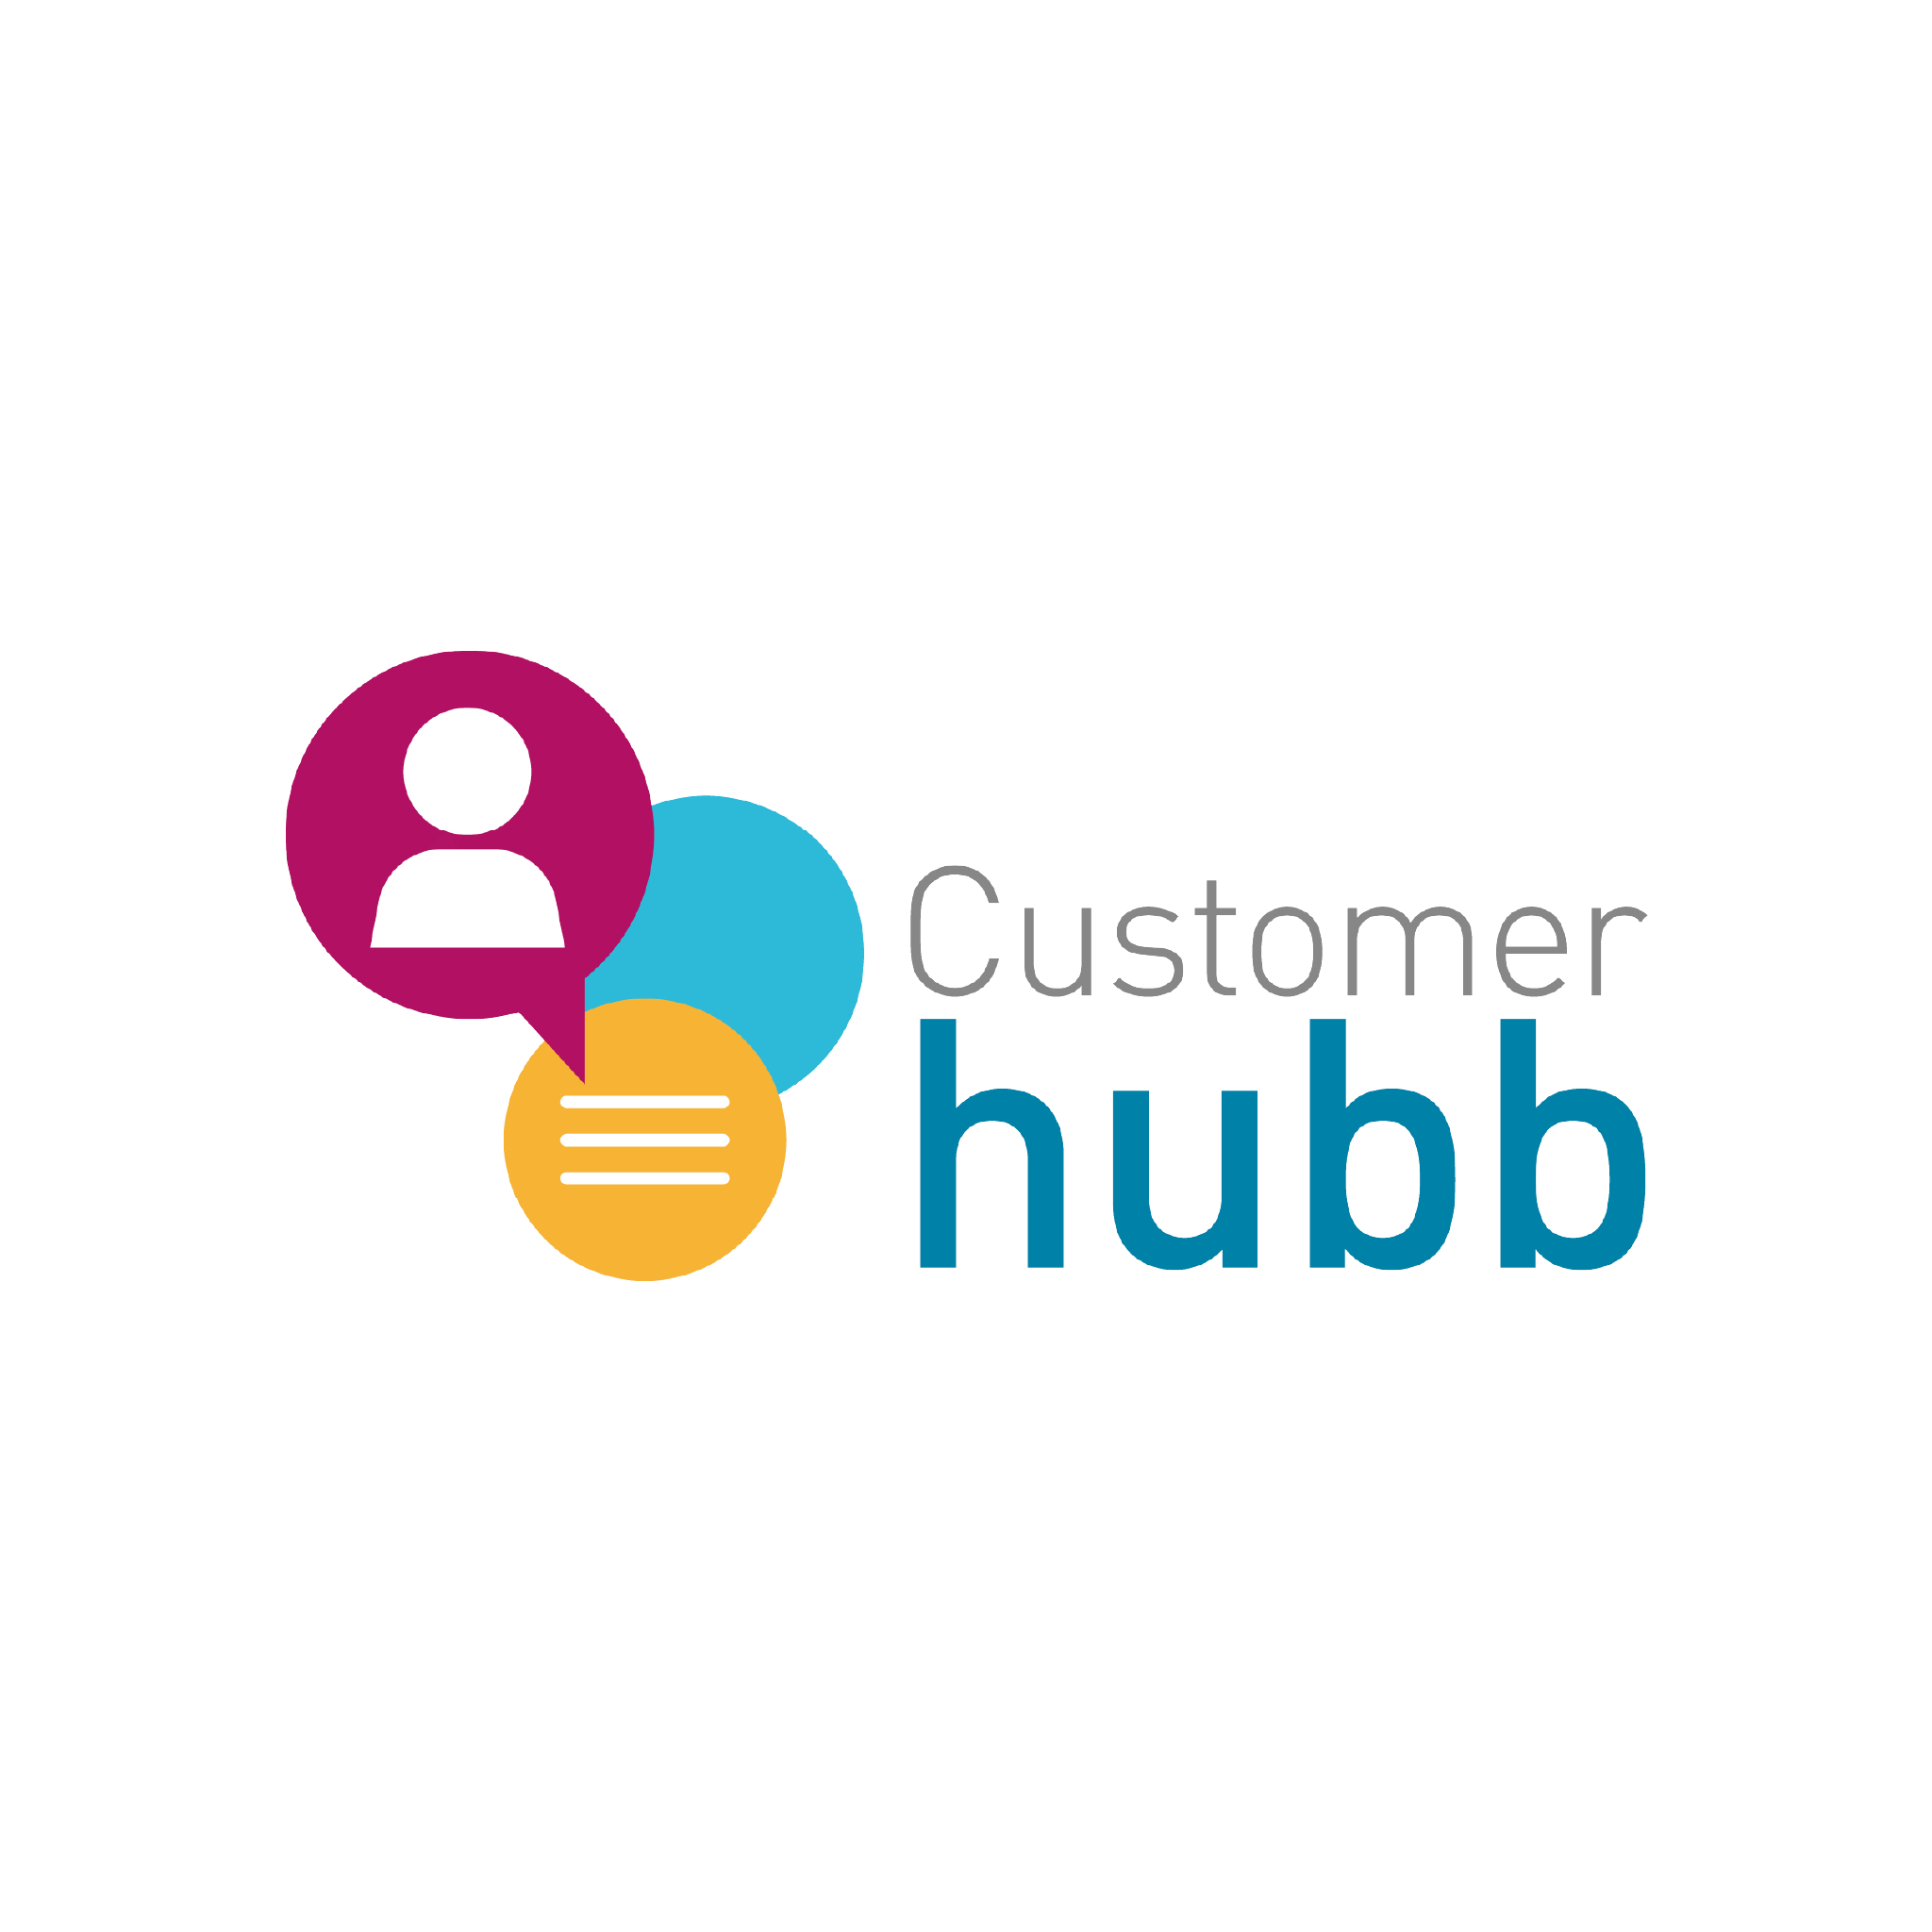 The Customer hubb forum logo